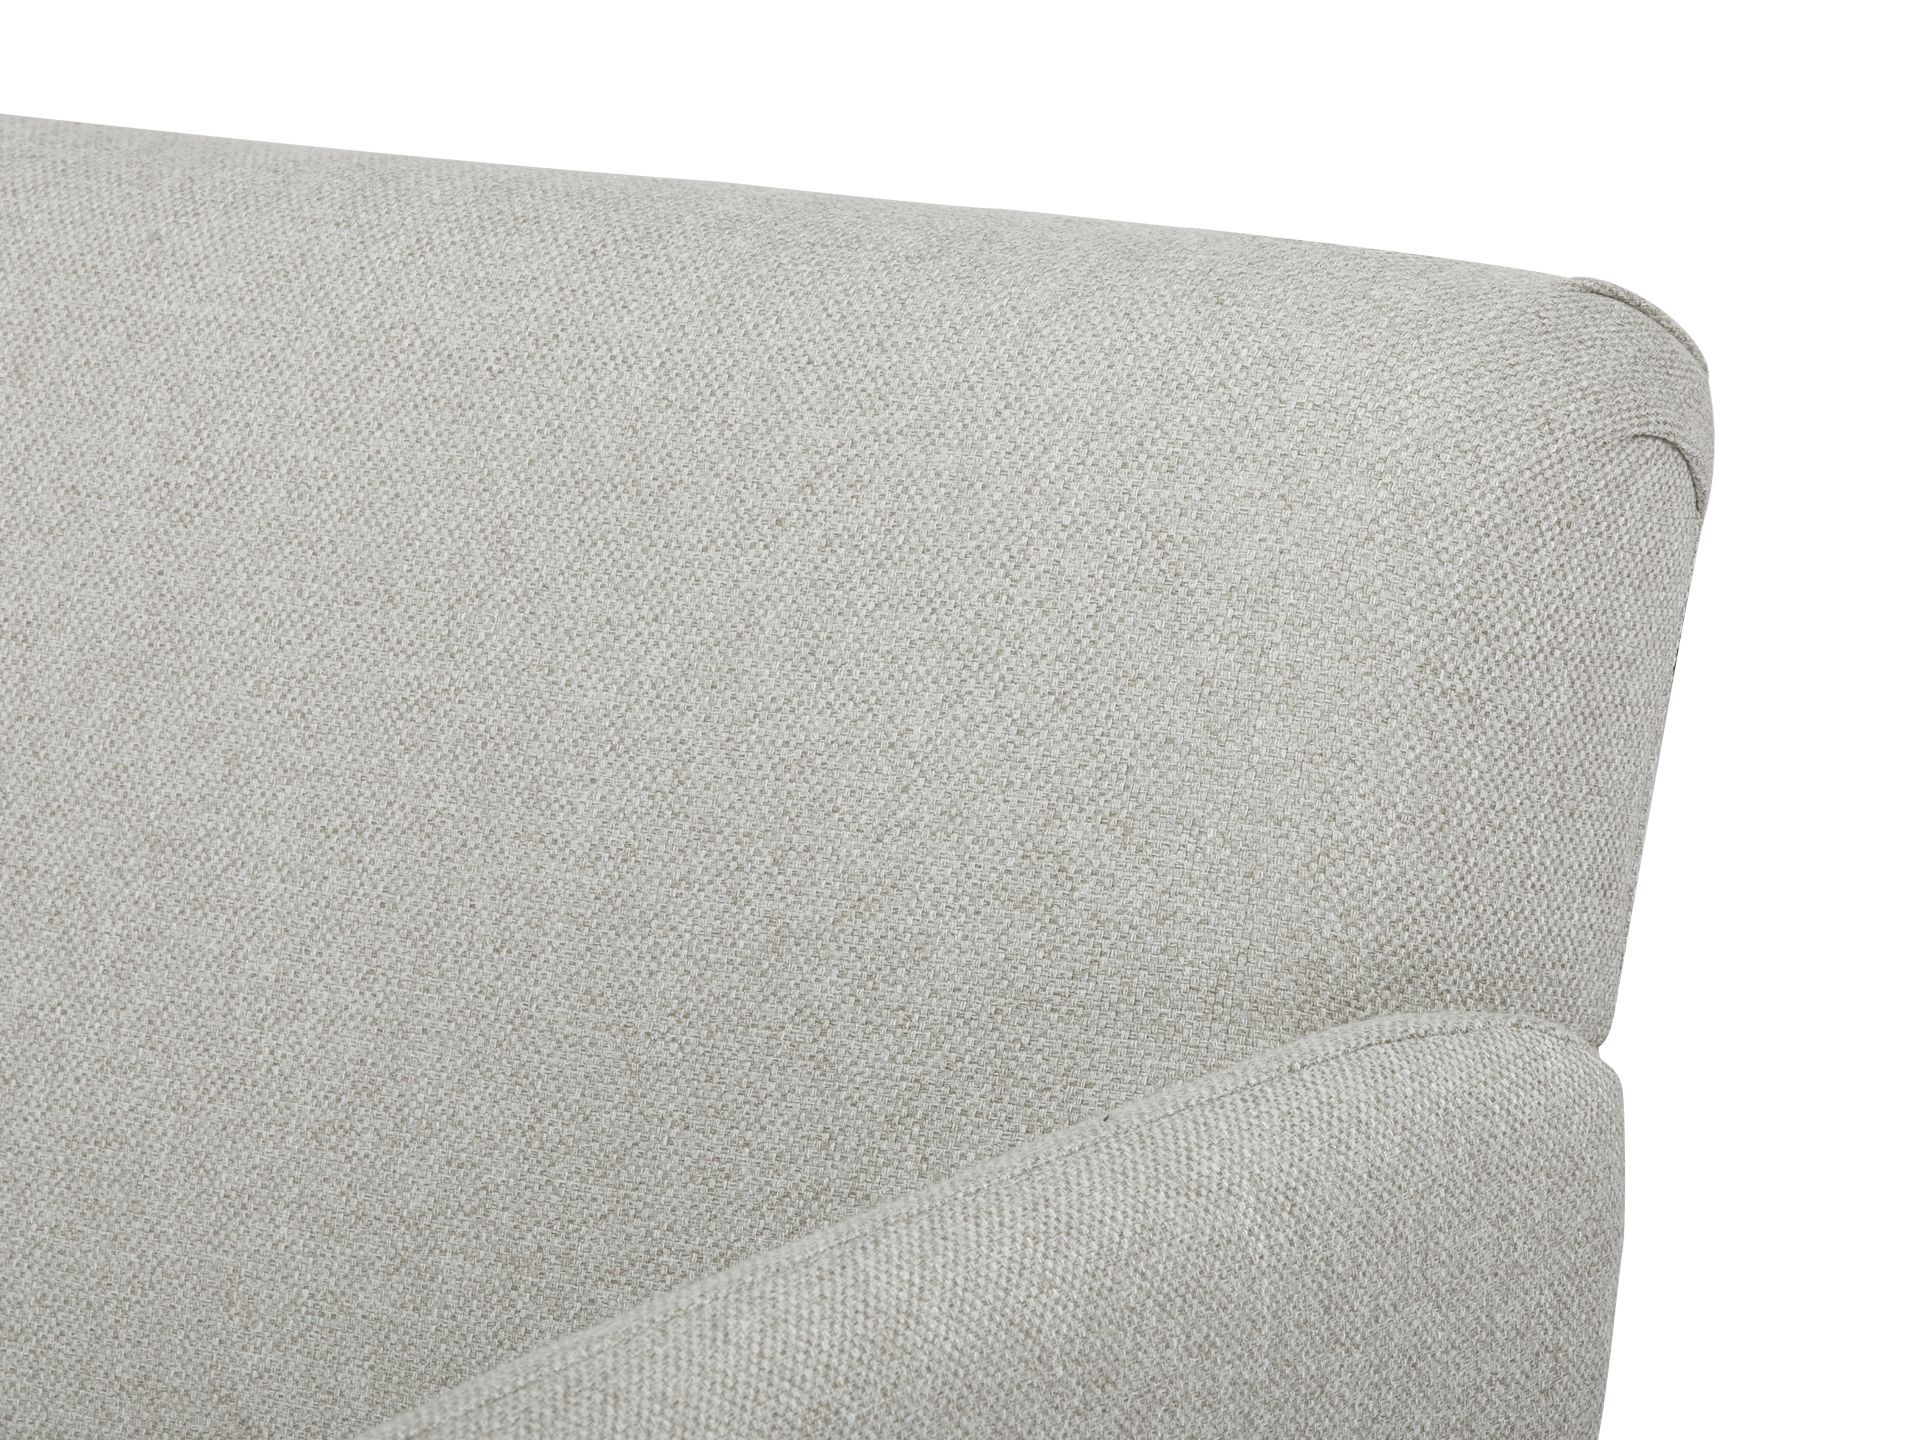 Silverton 3 Seater Sofa Bed - Light Grey